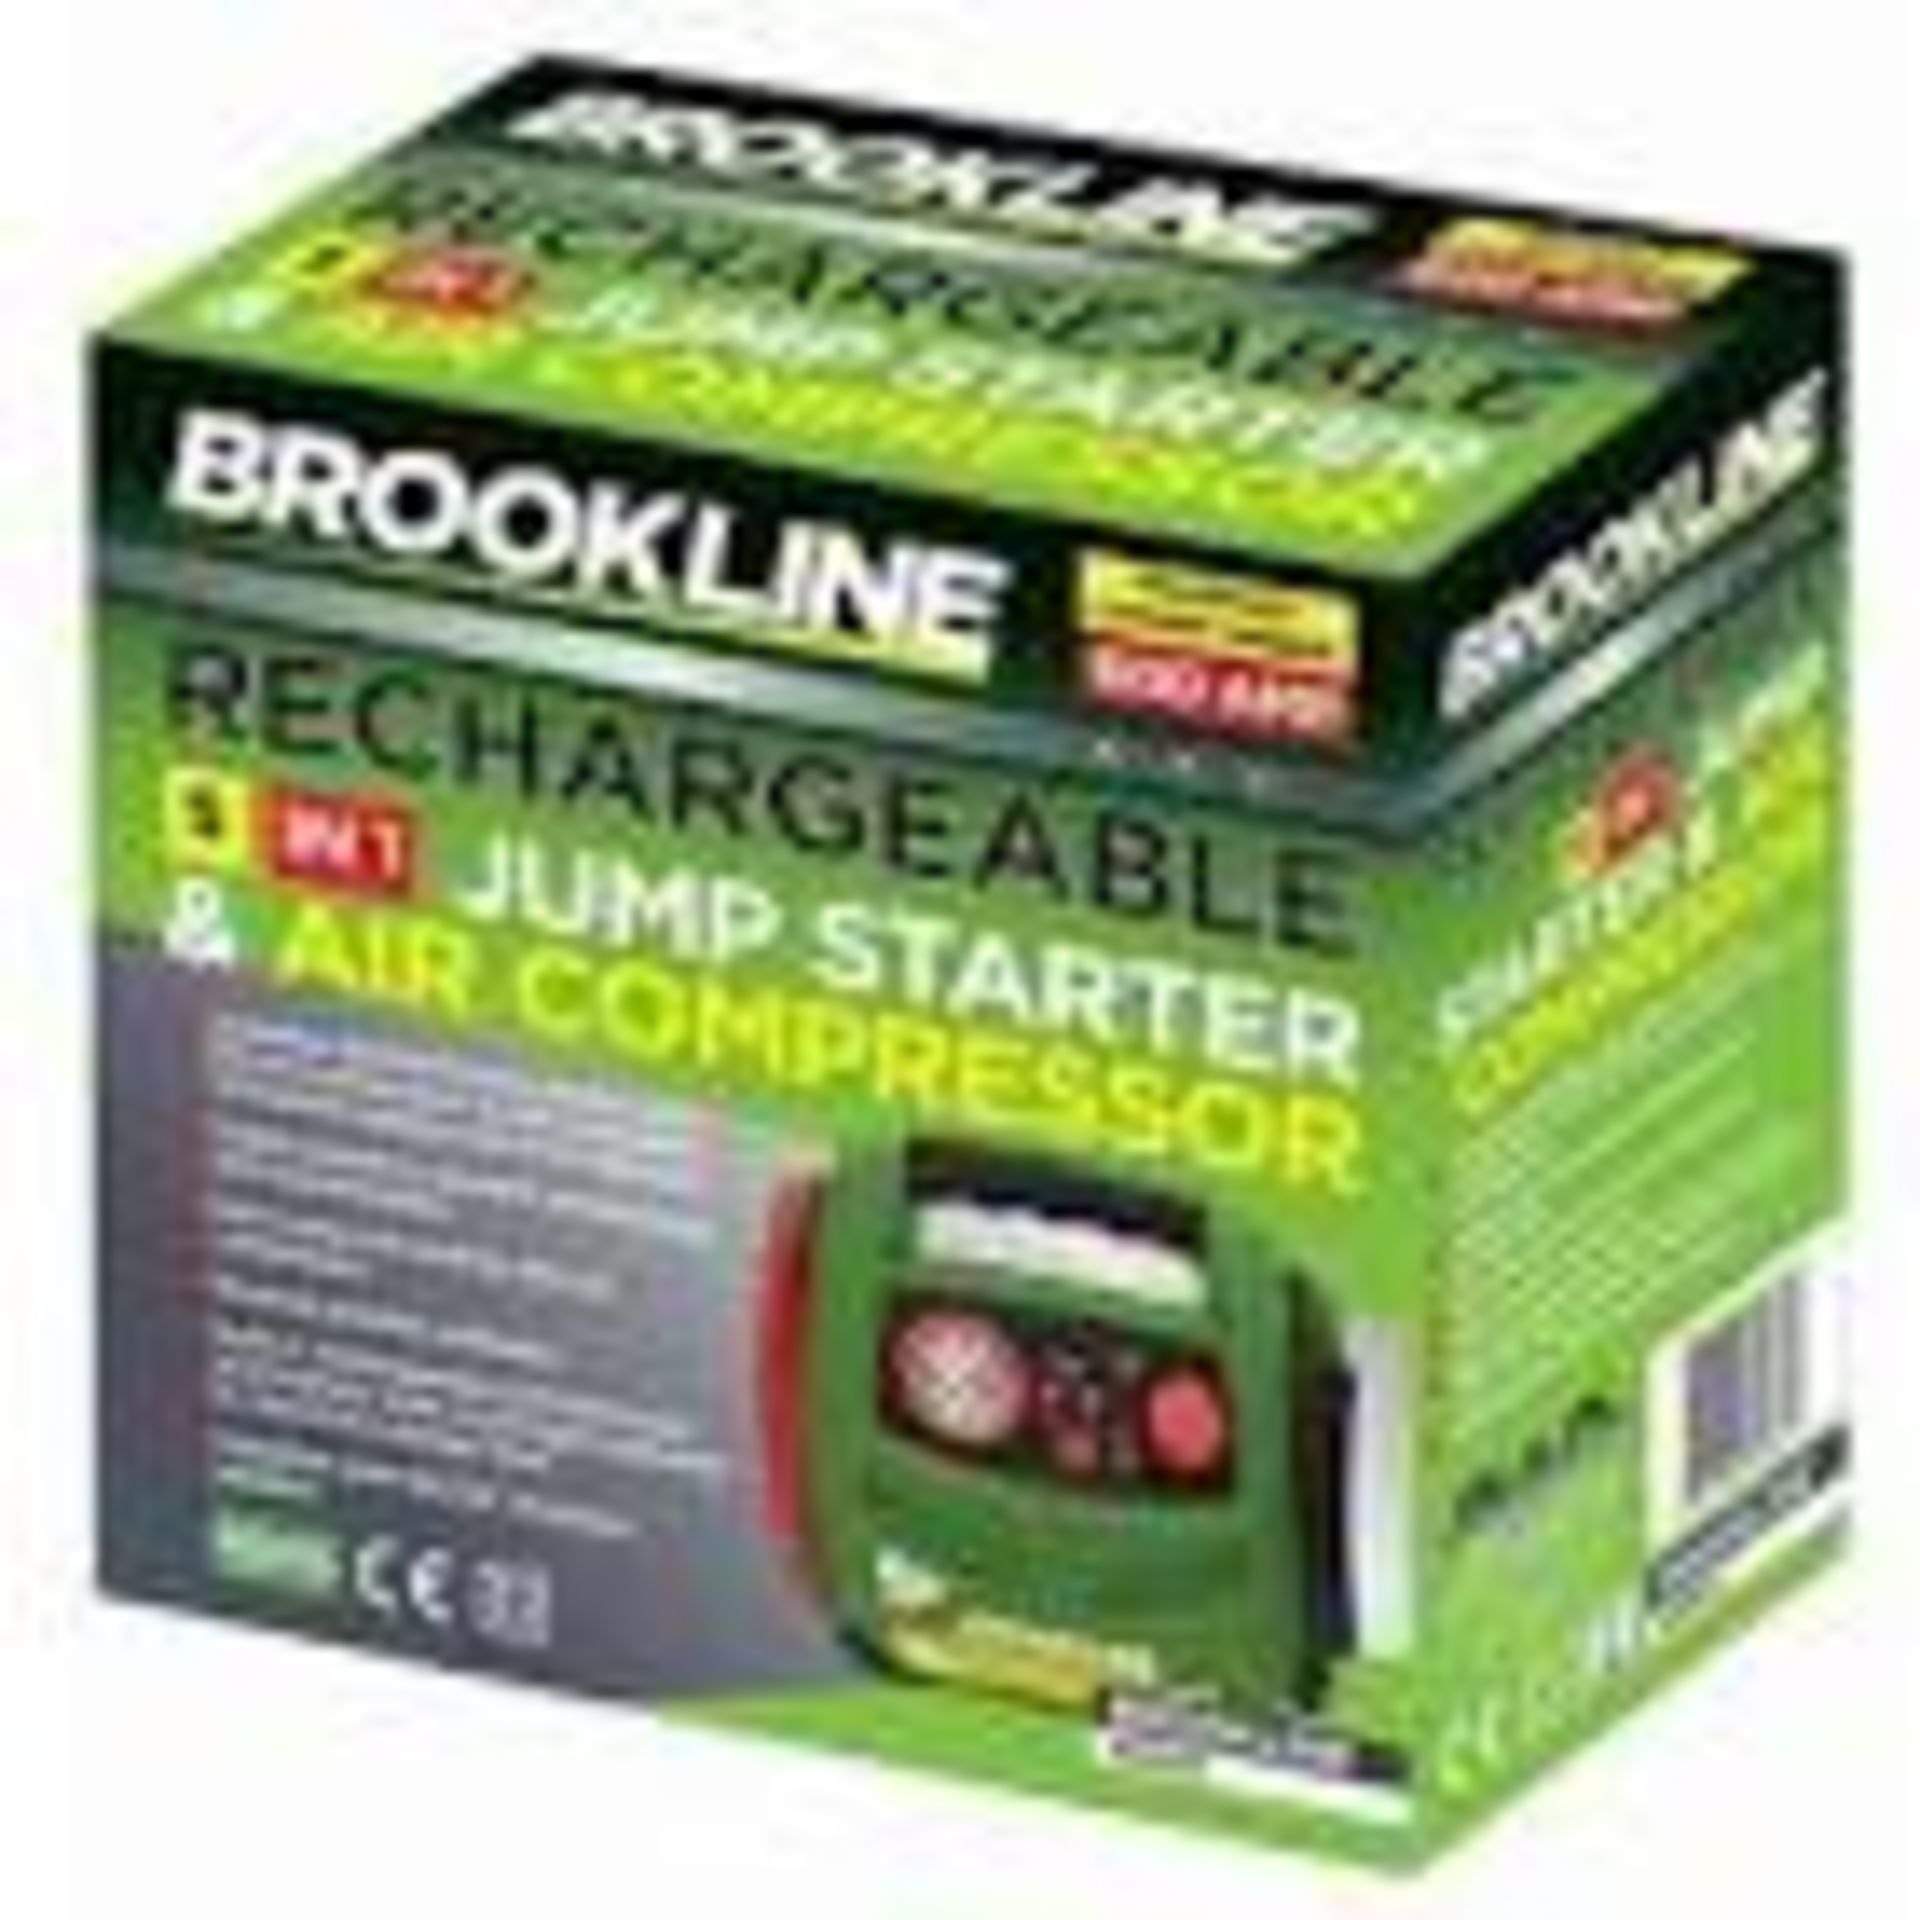 10 x Brookline 5-in-1 Jumpstarter & Compressor | Total RRP £600 - Image 2 of 2